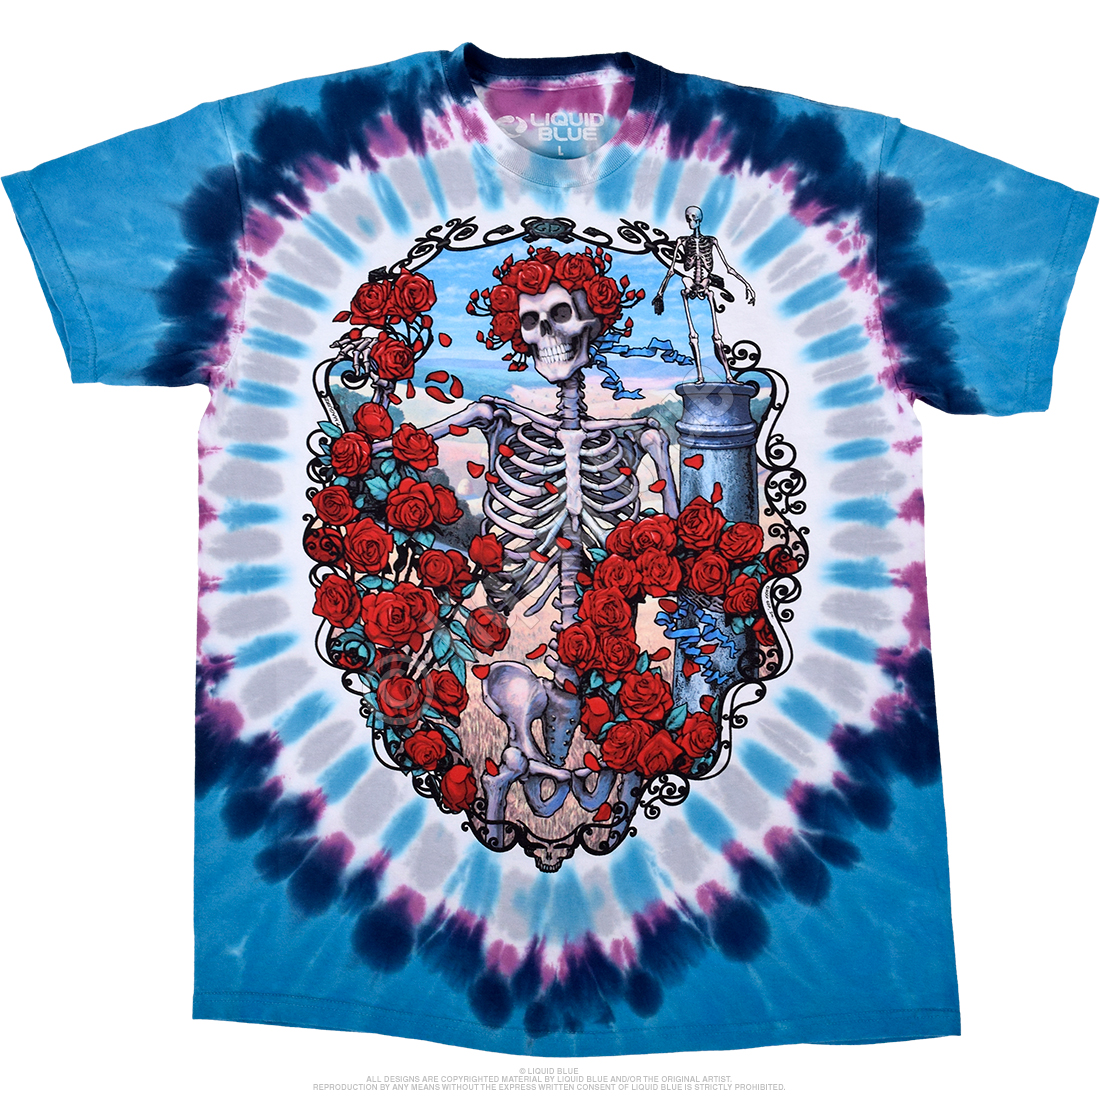 Vintage The Grateful Dead tie dye Liquid Blue T-Shirt Rock Skull & Roses  Small S